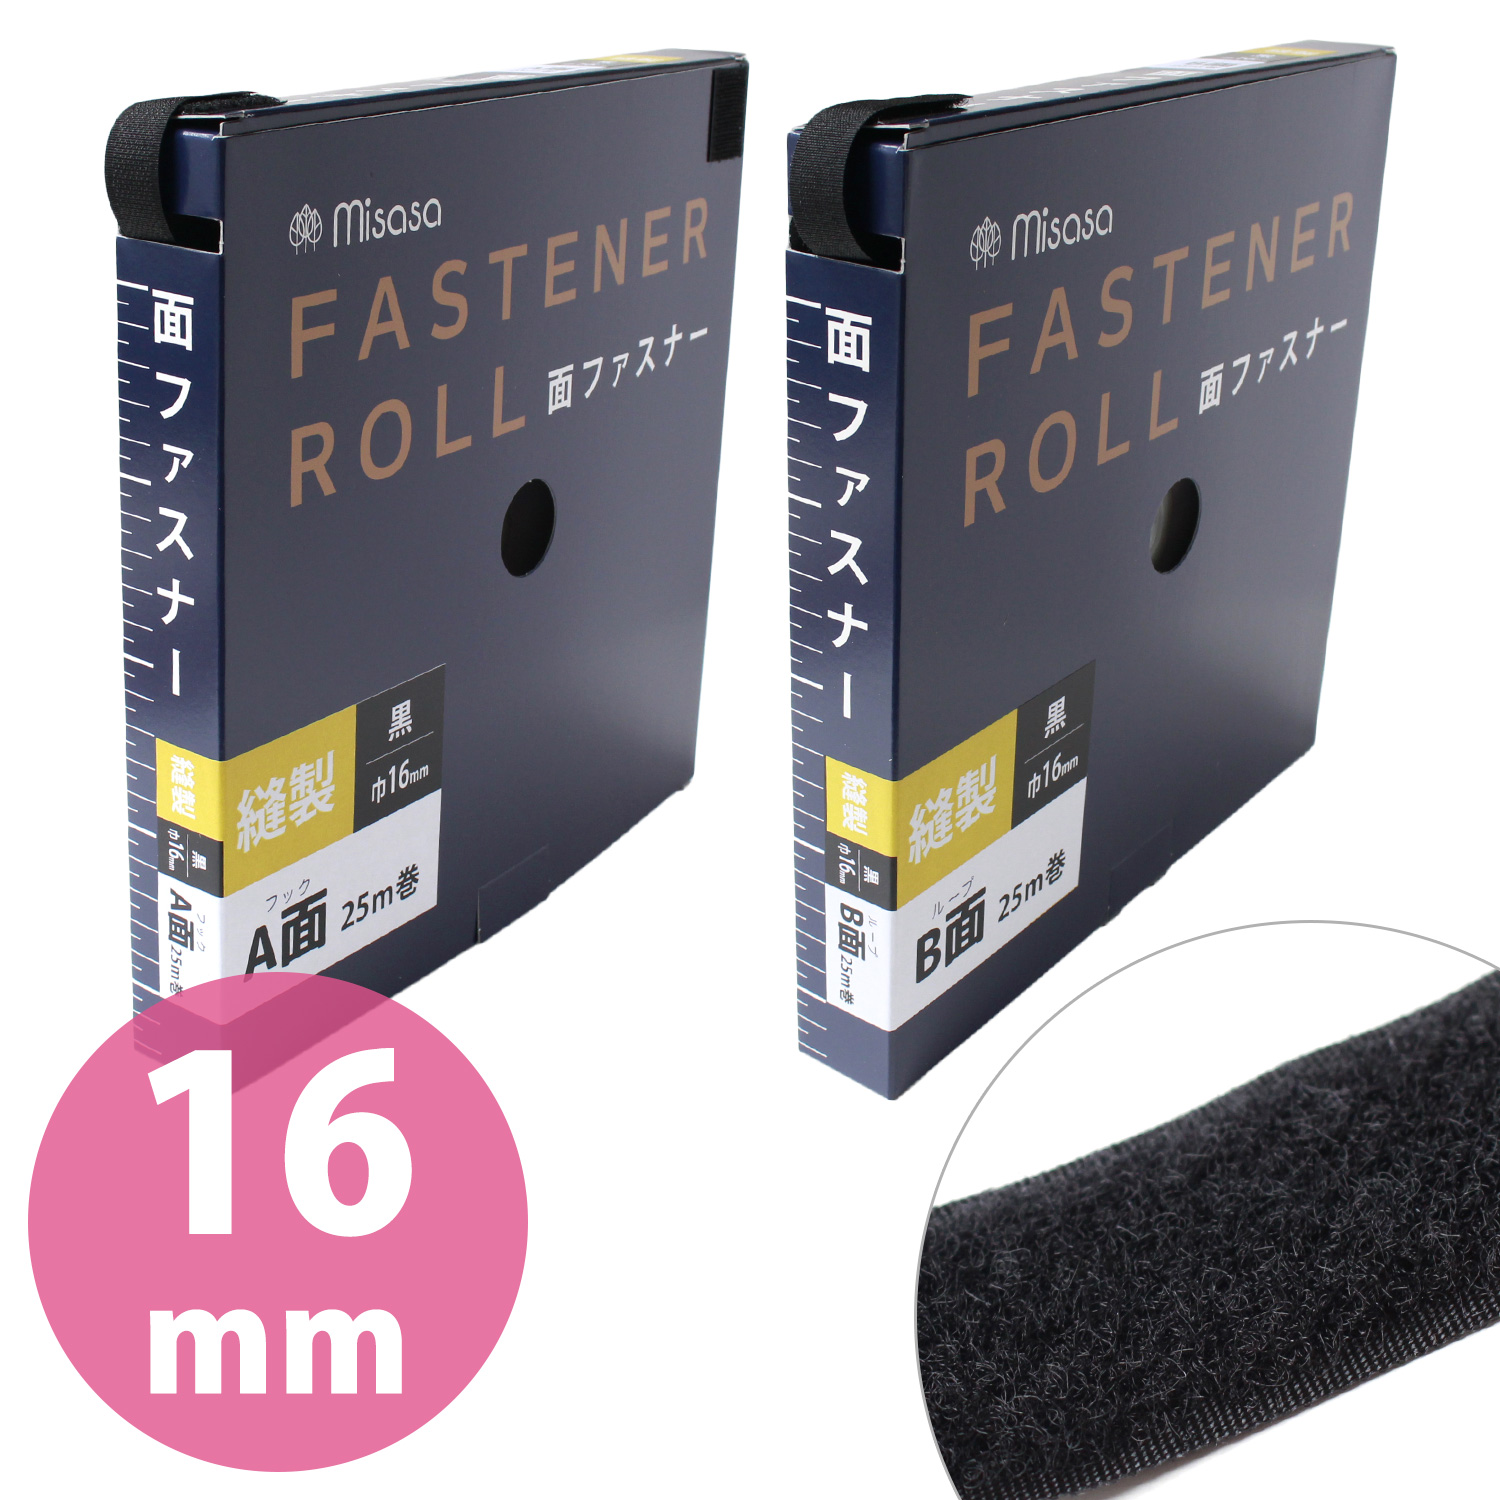 MIS6952~53 Fastener Tape, Velcro, Roll Type, 16mm x 25m Roll, Black (box)